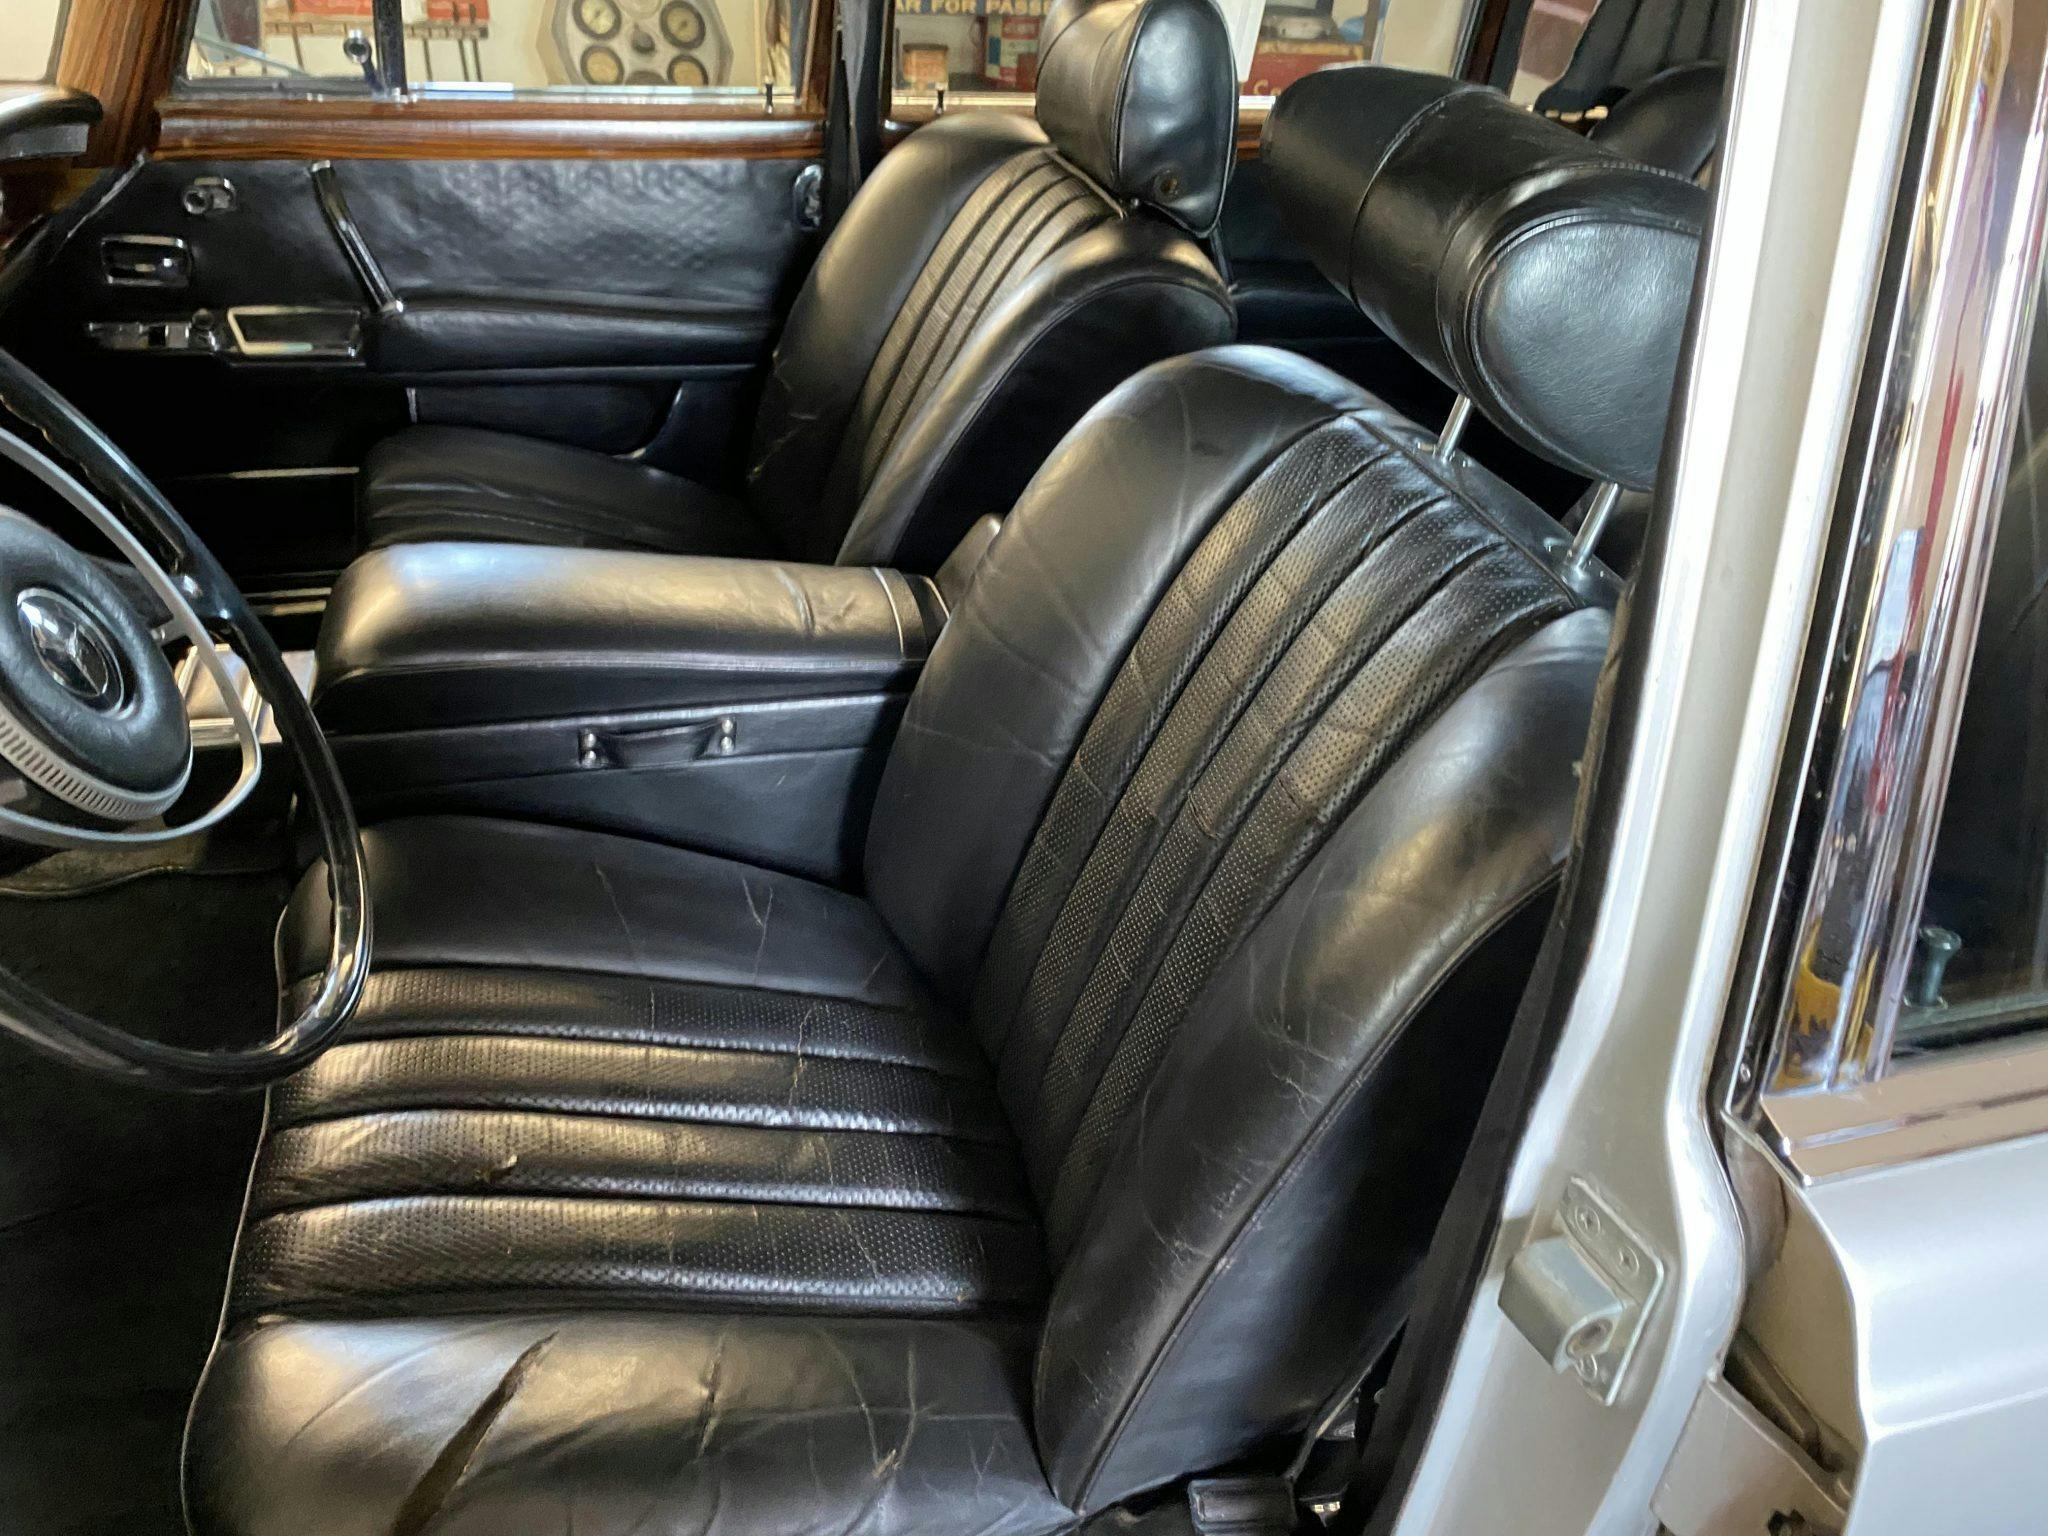 1969 Mercedes-Benz 600 Elvis car interior front leather seats